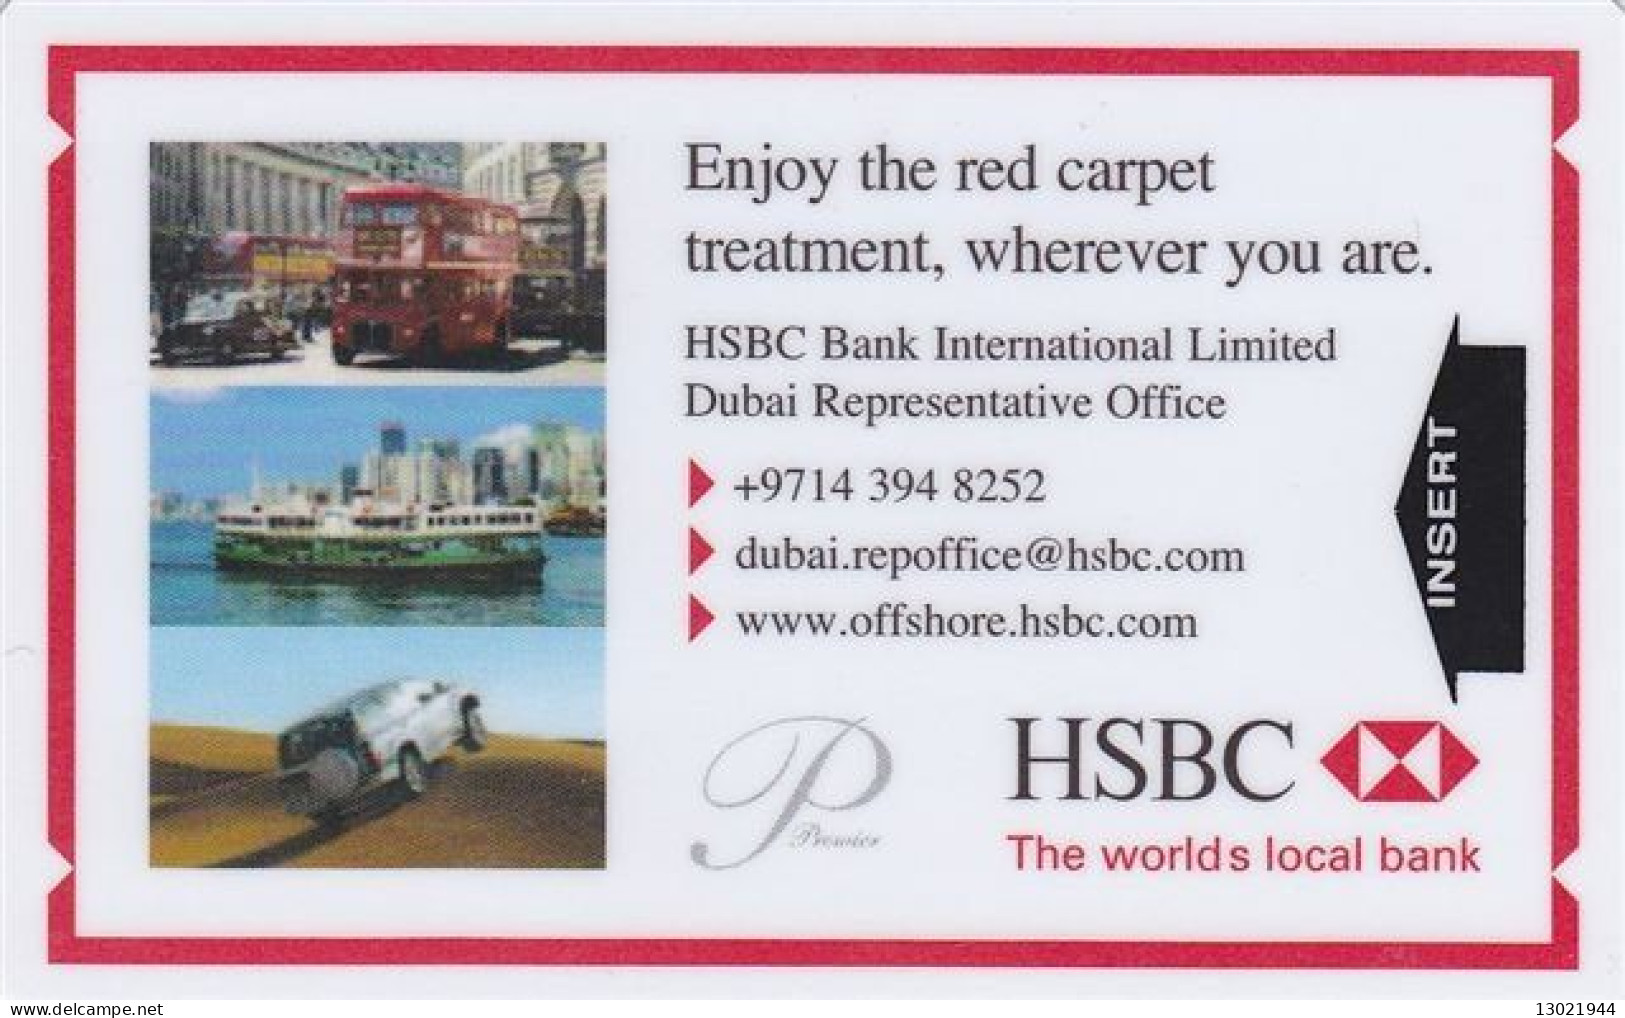 QATAR   KEY HOTEL   Mövenpick Hotel Doha - HSBC - Hotelkarten